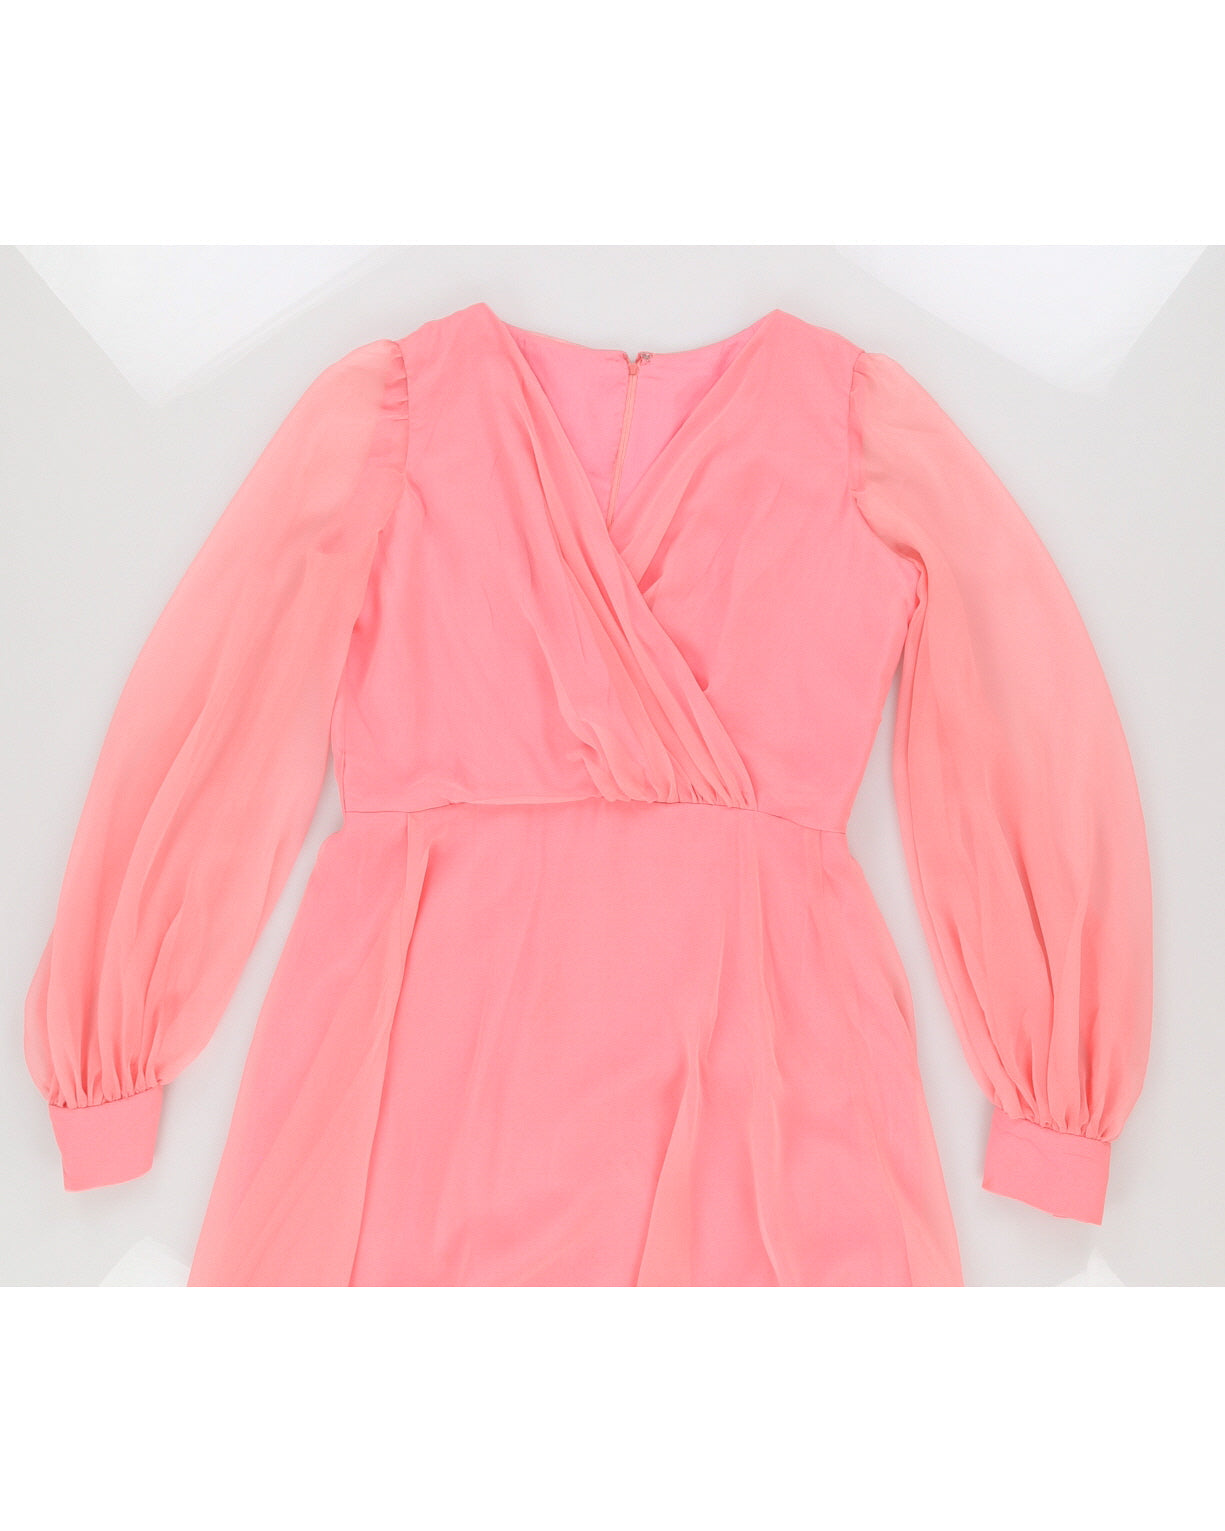 Vintage 1970s Pink Evening Gown - M / L